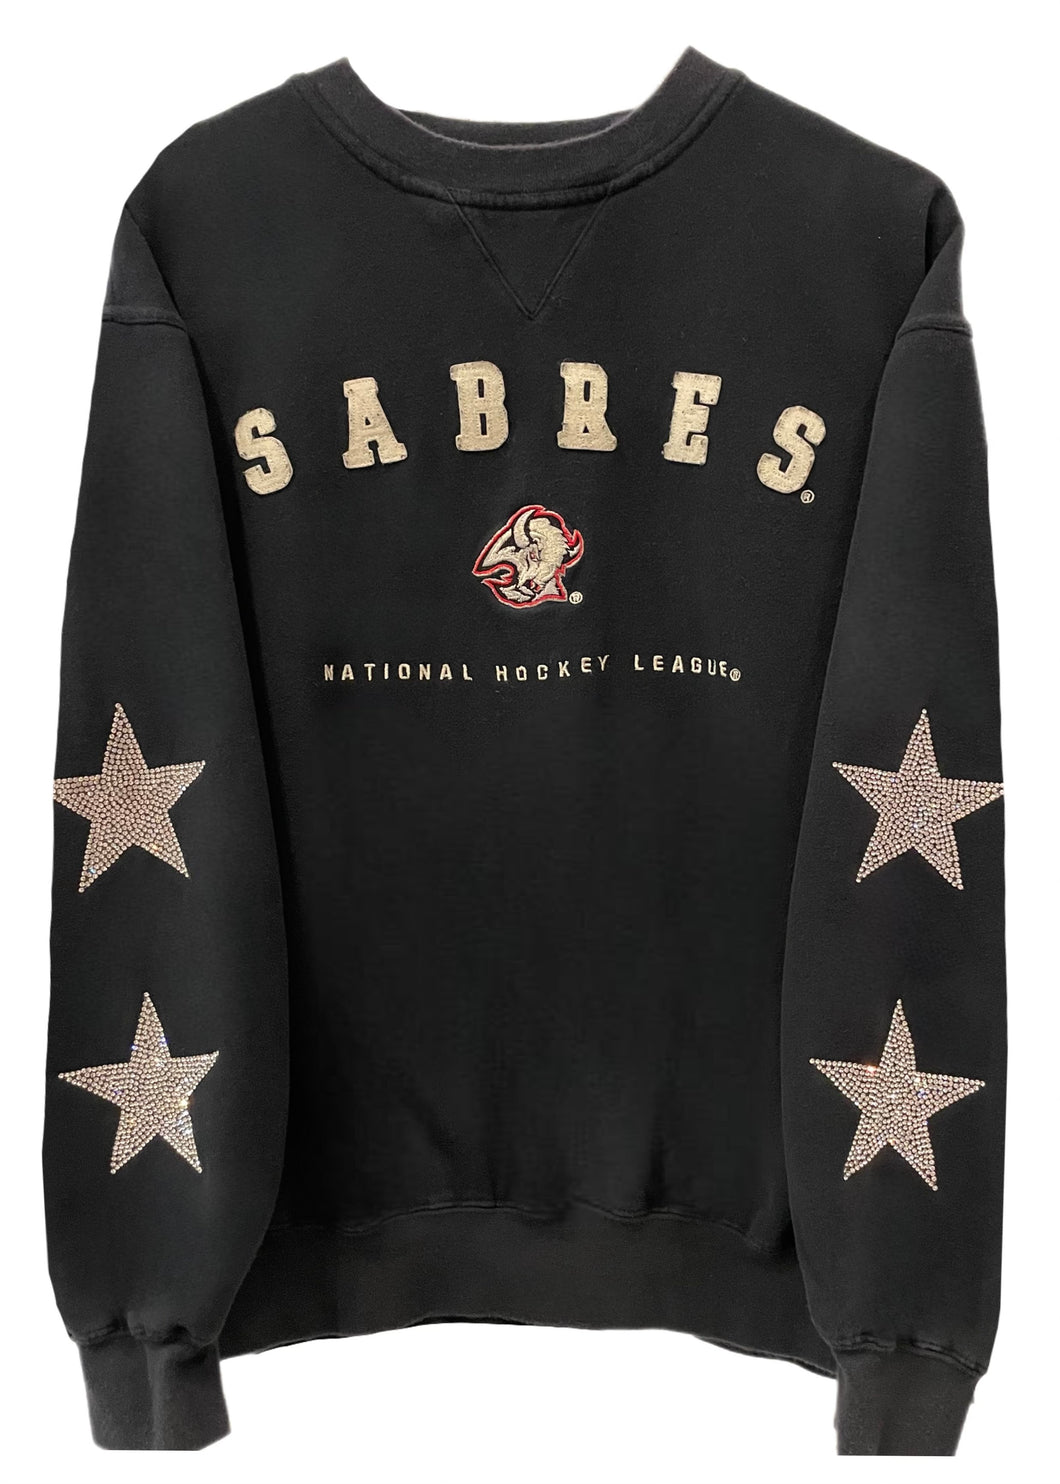 Buffalo Sabres, NHL One of a KIND Vintage Sweatshirt with Crystal Stars Design